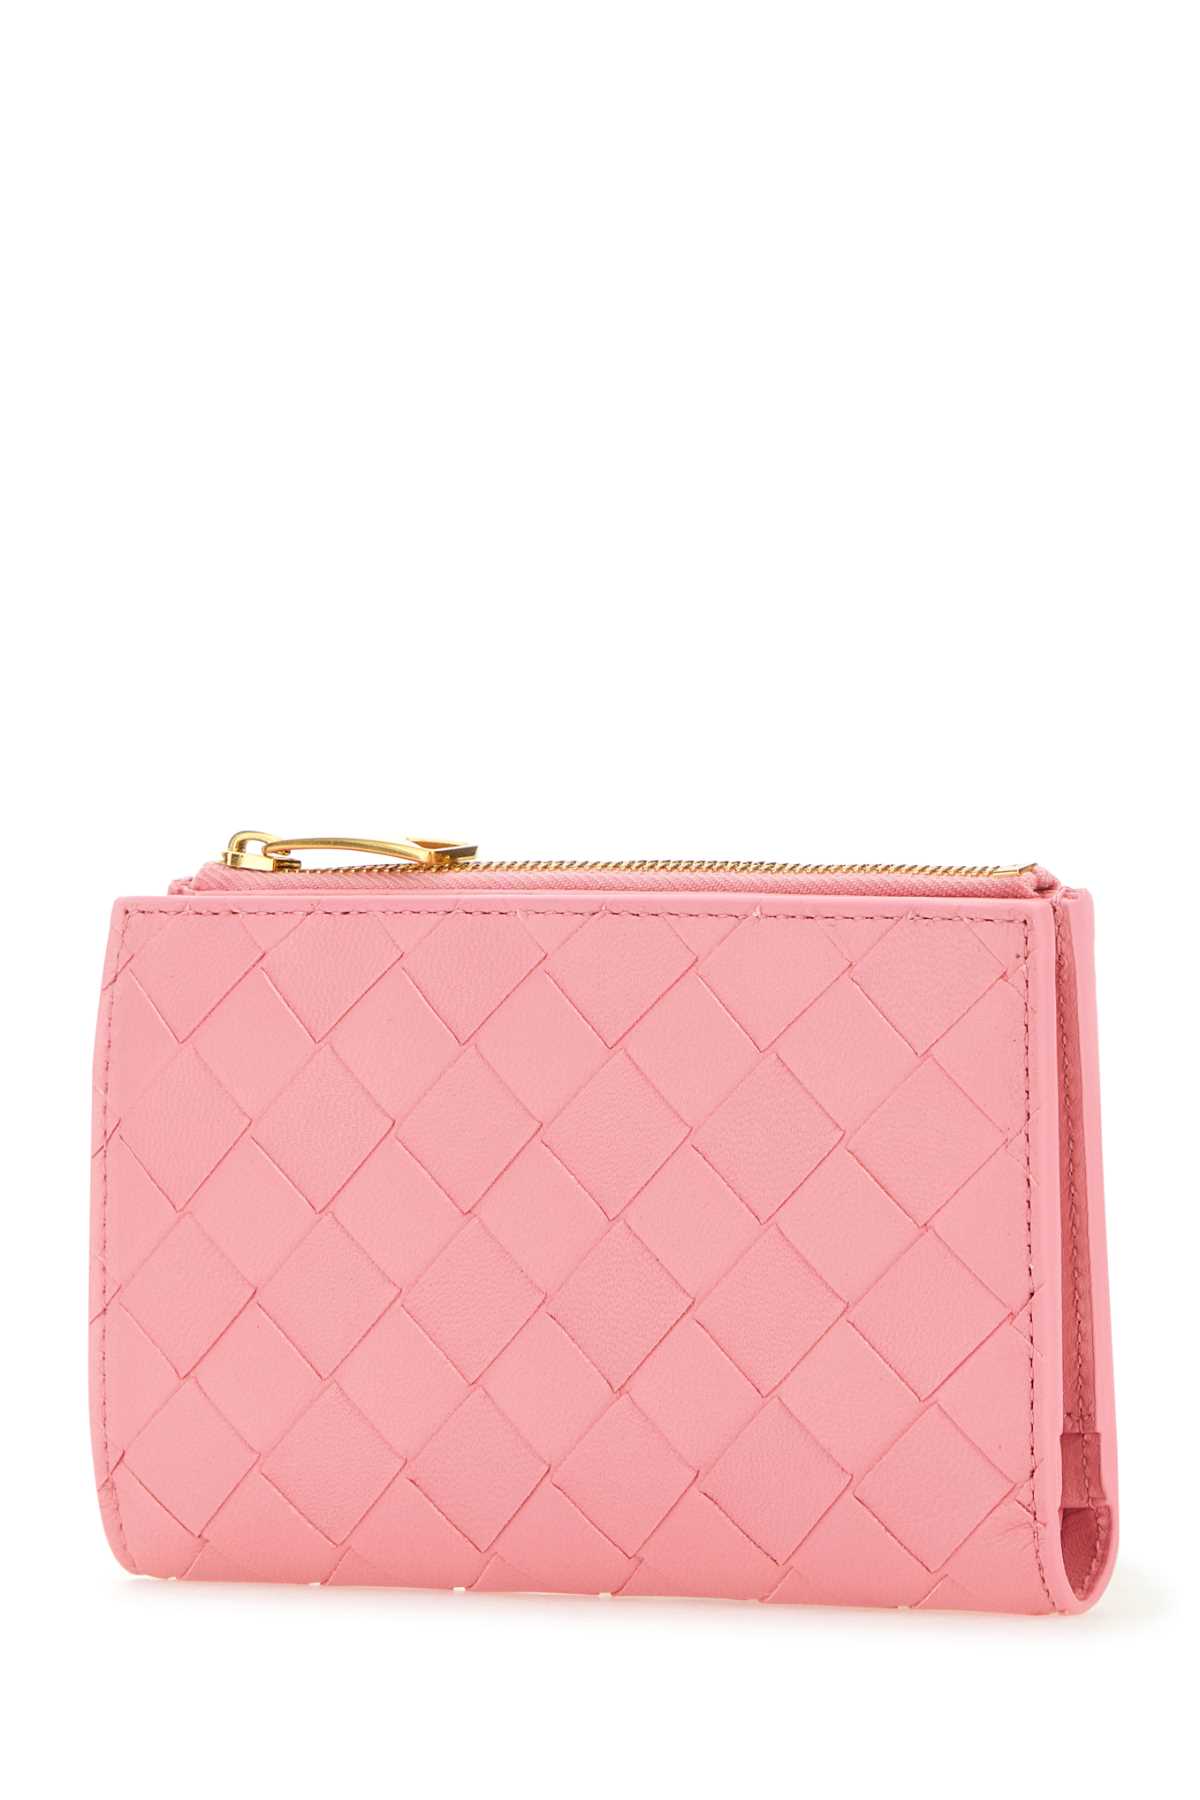 Shop Bottega Veneta Pink Nappa Leather Medium Intrecciato Wallet